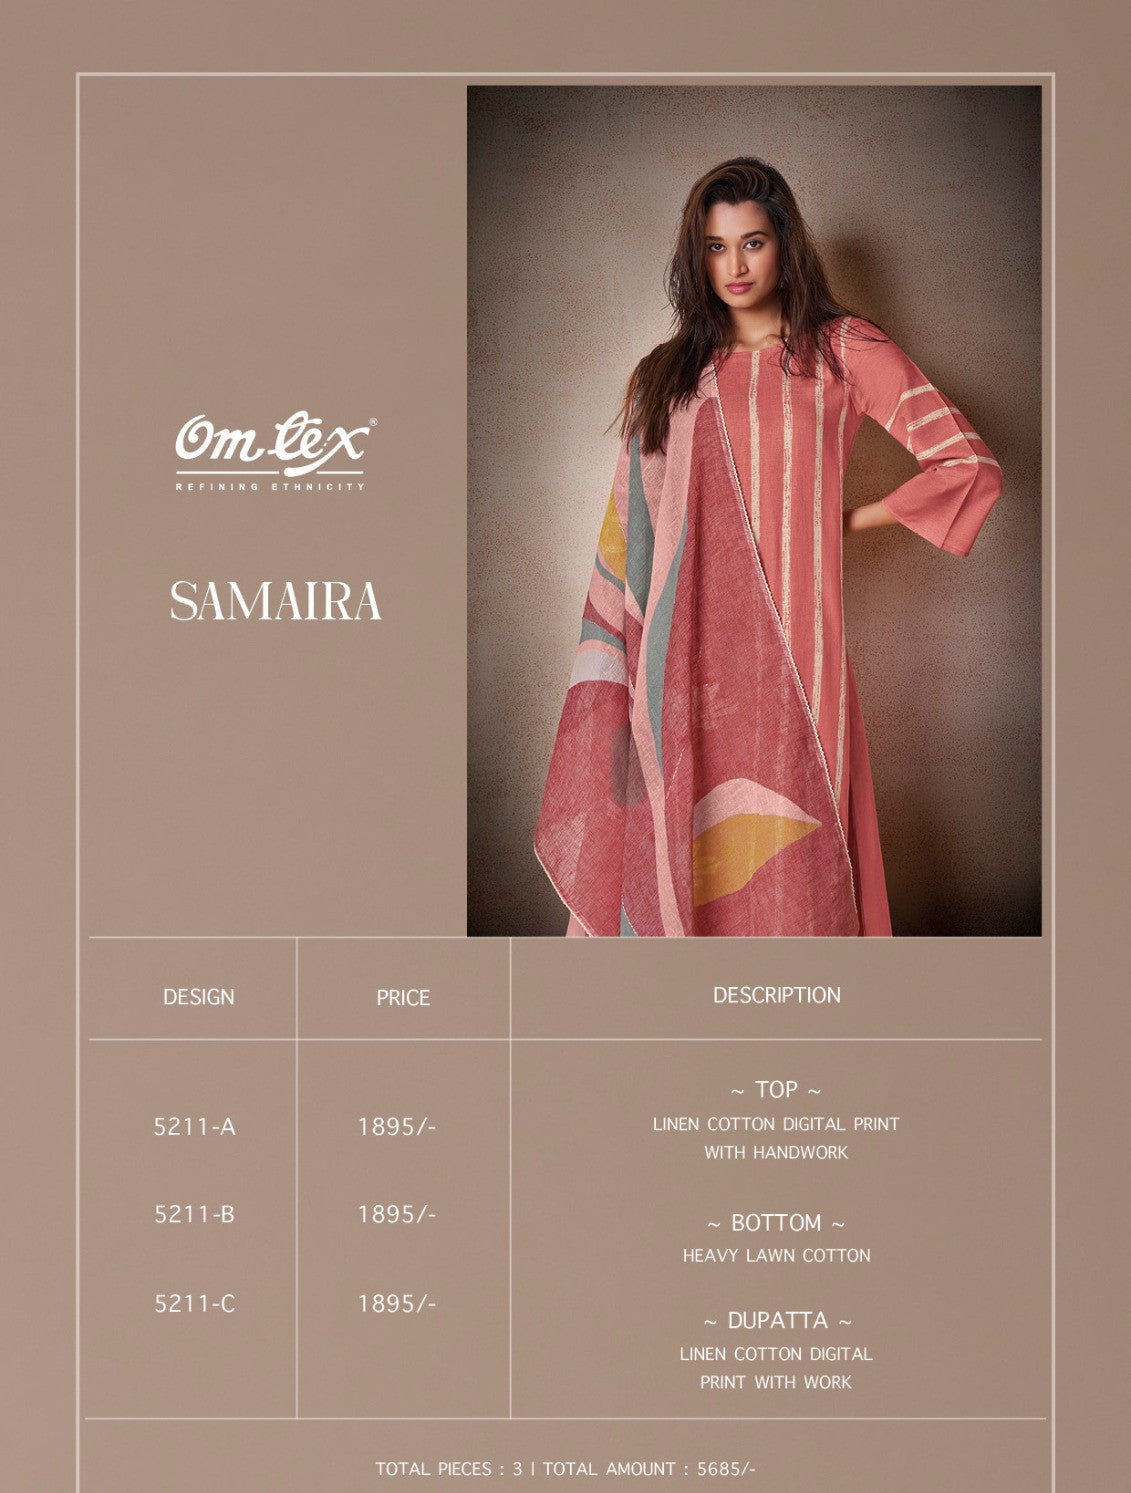 Samaira Omtex Linen Cotton Pant Style Suits